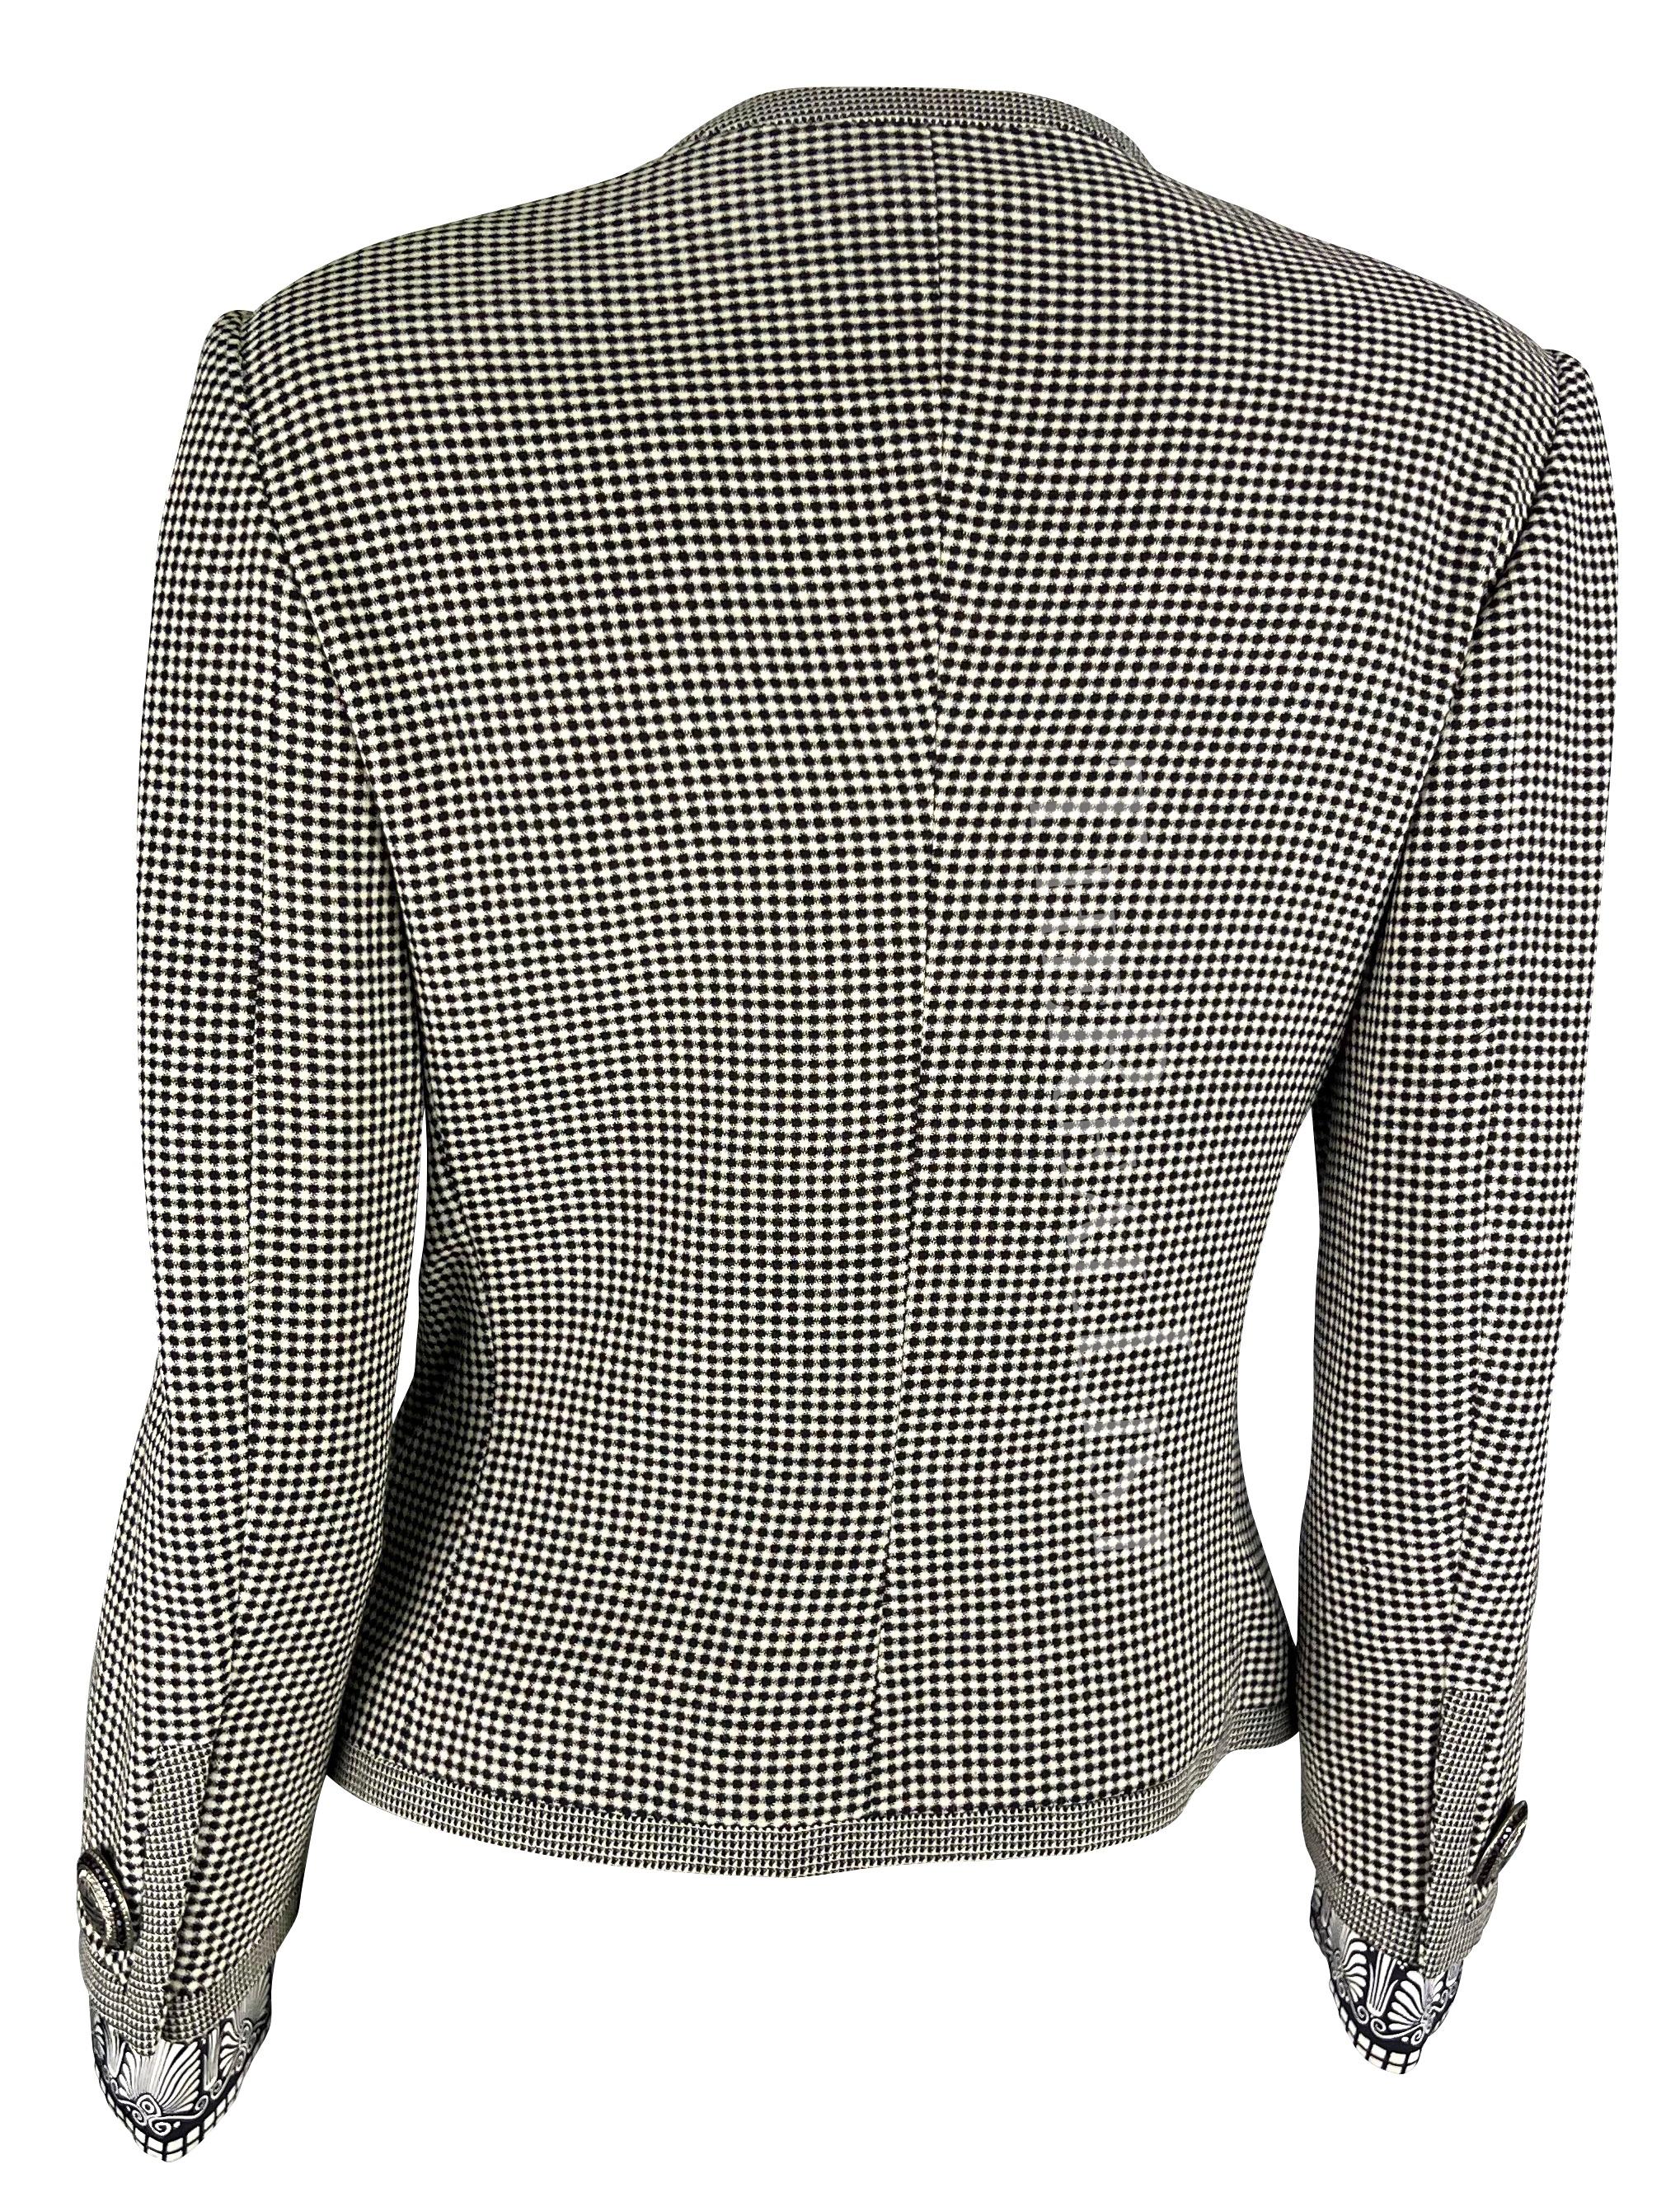 Women's S/S 1992 Gianni Versace Black White Checkered Rhinestone Baroque Jacket For Sale